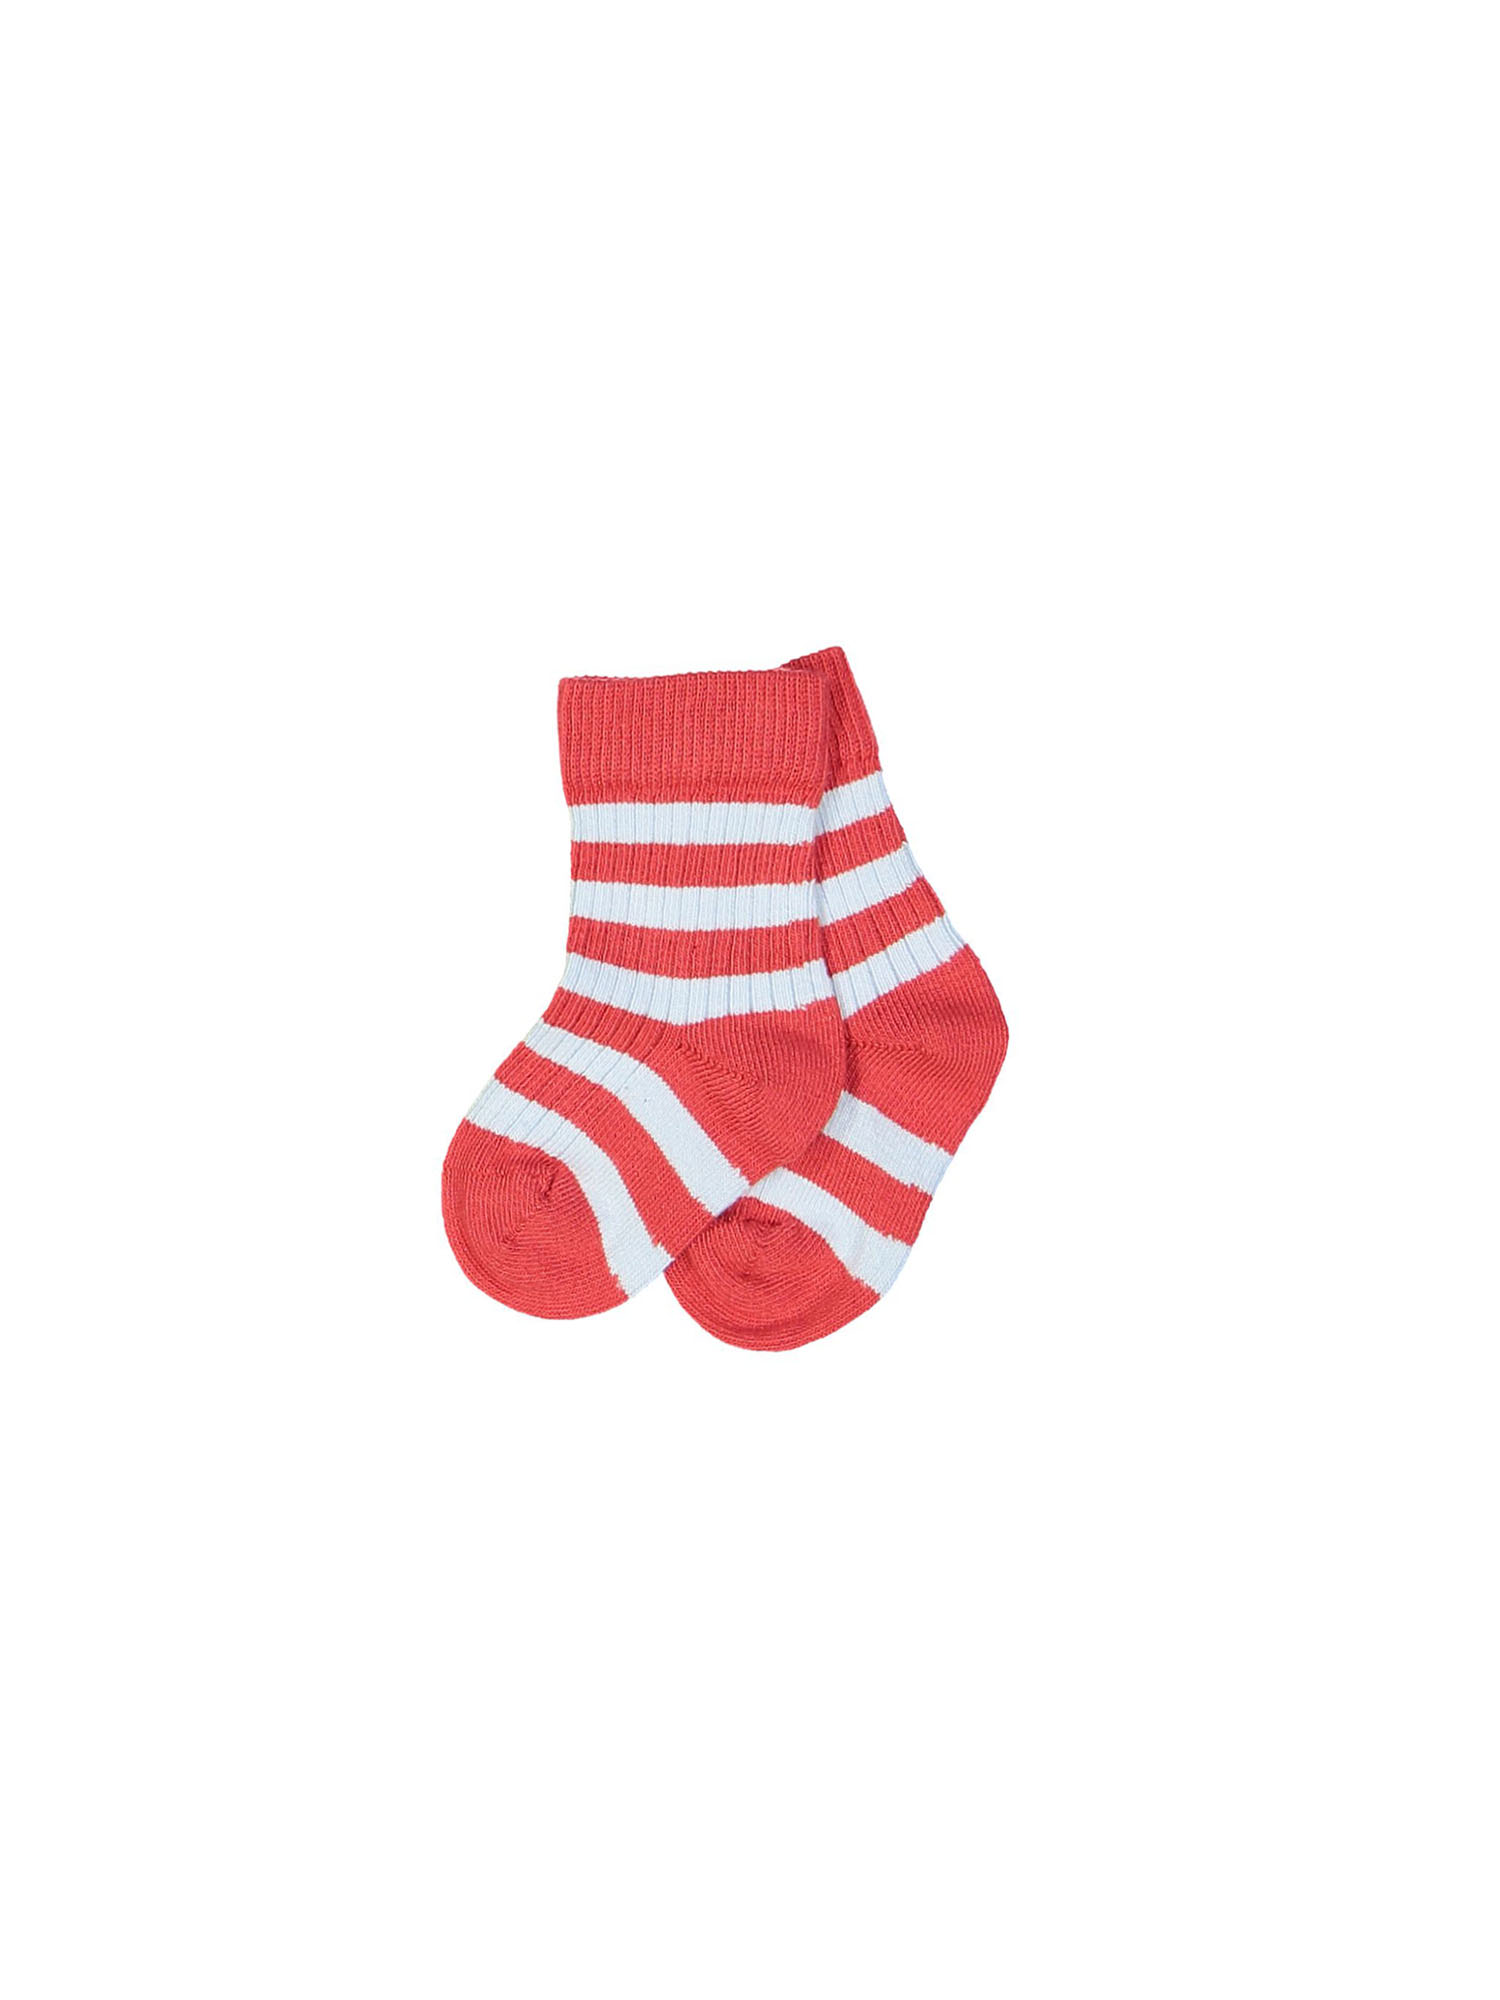 socks striped red